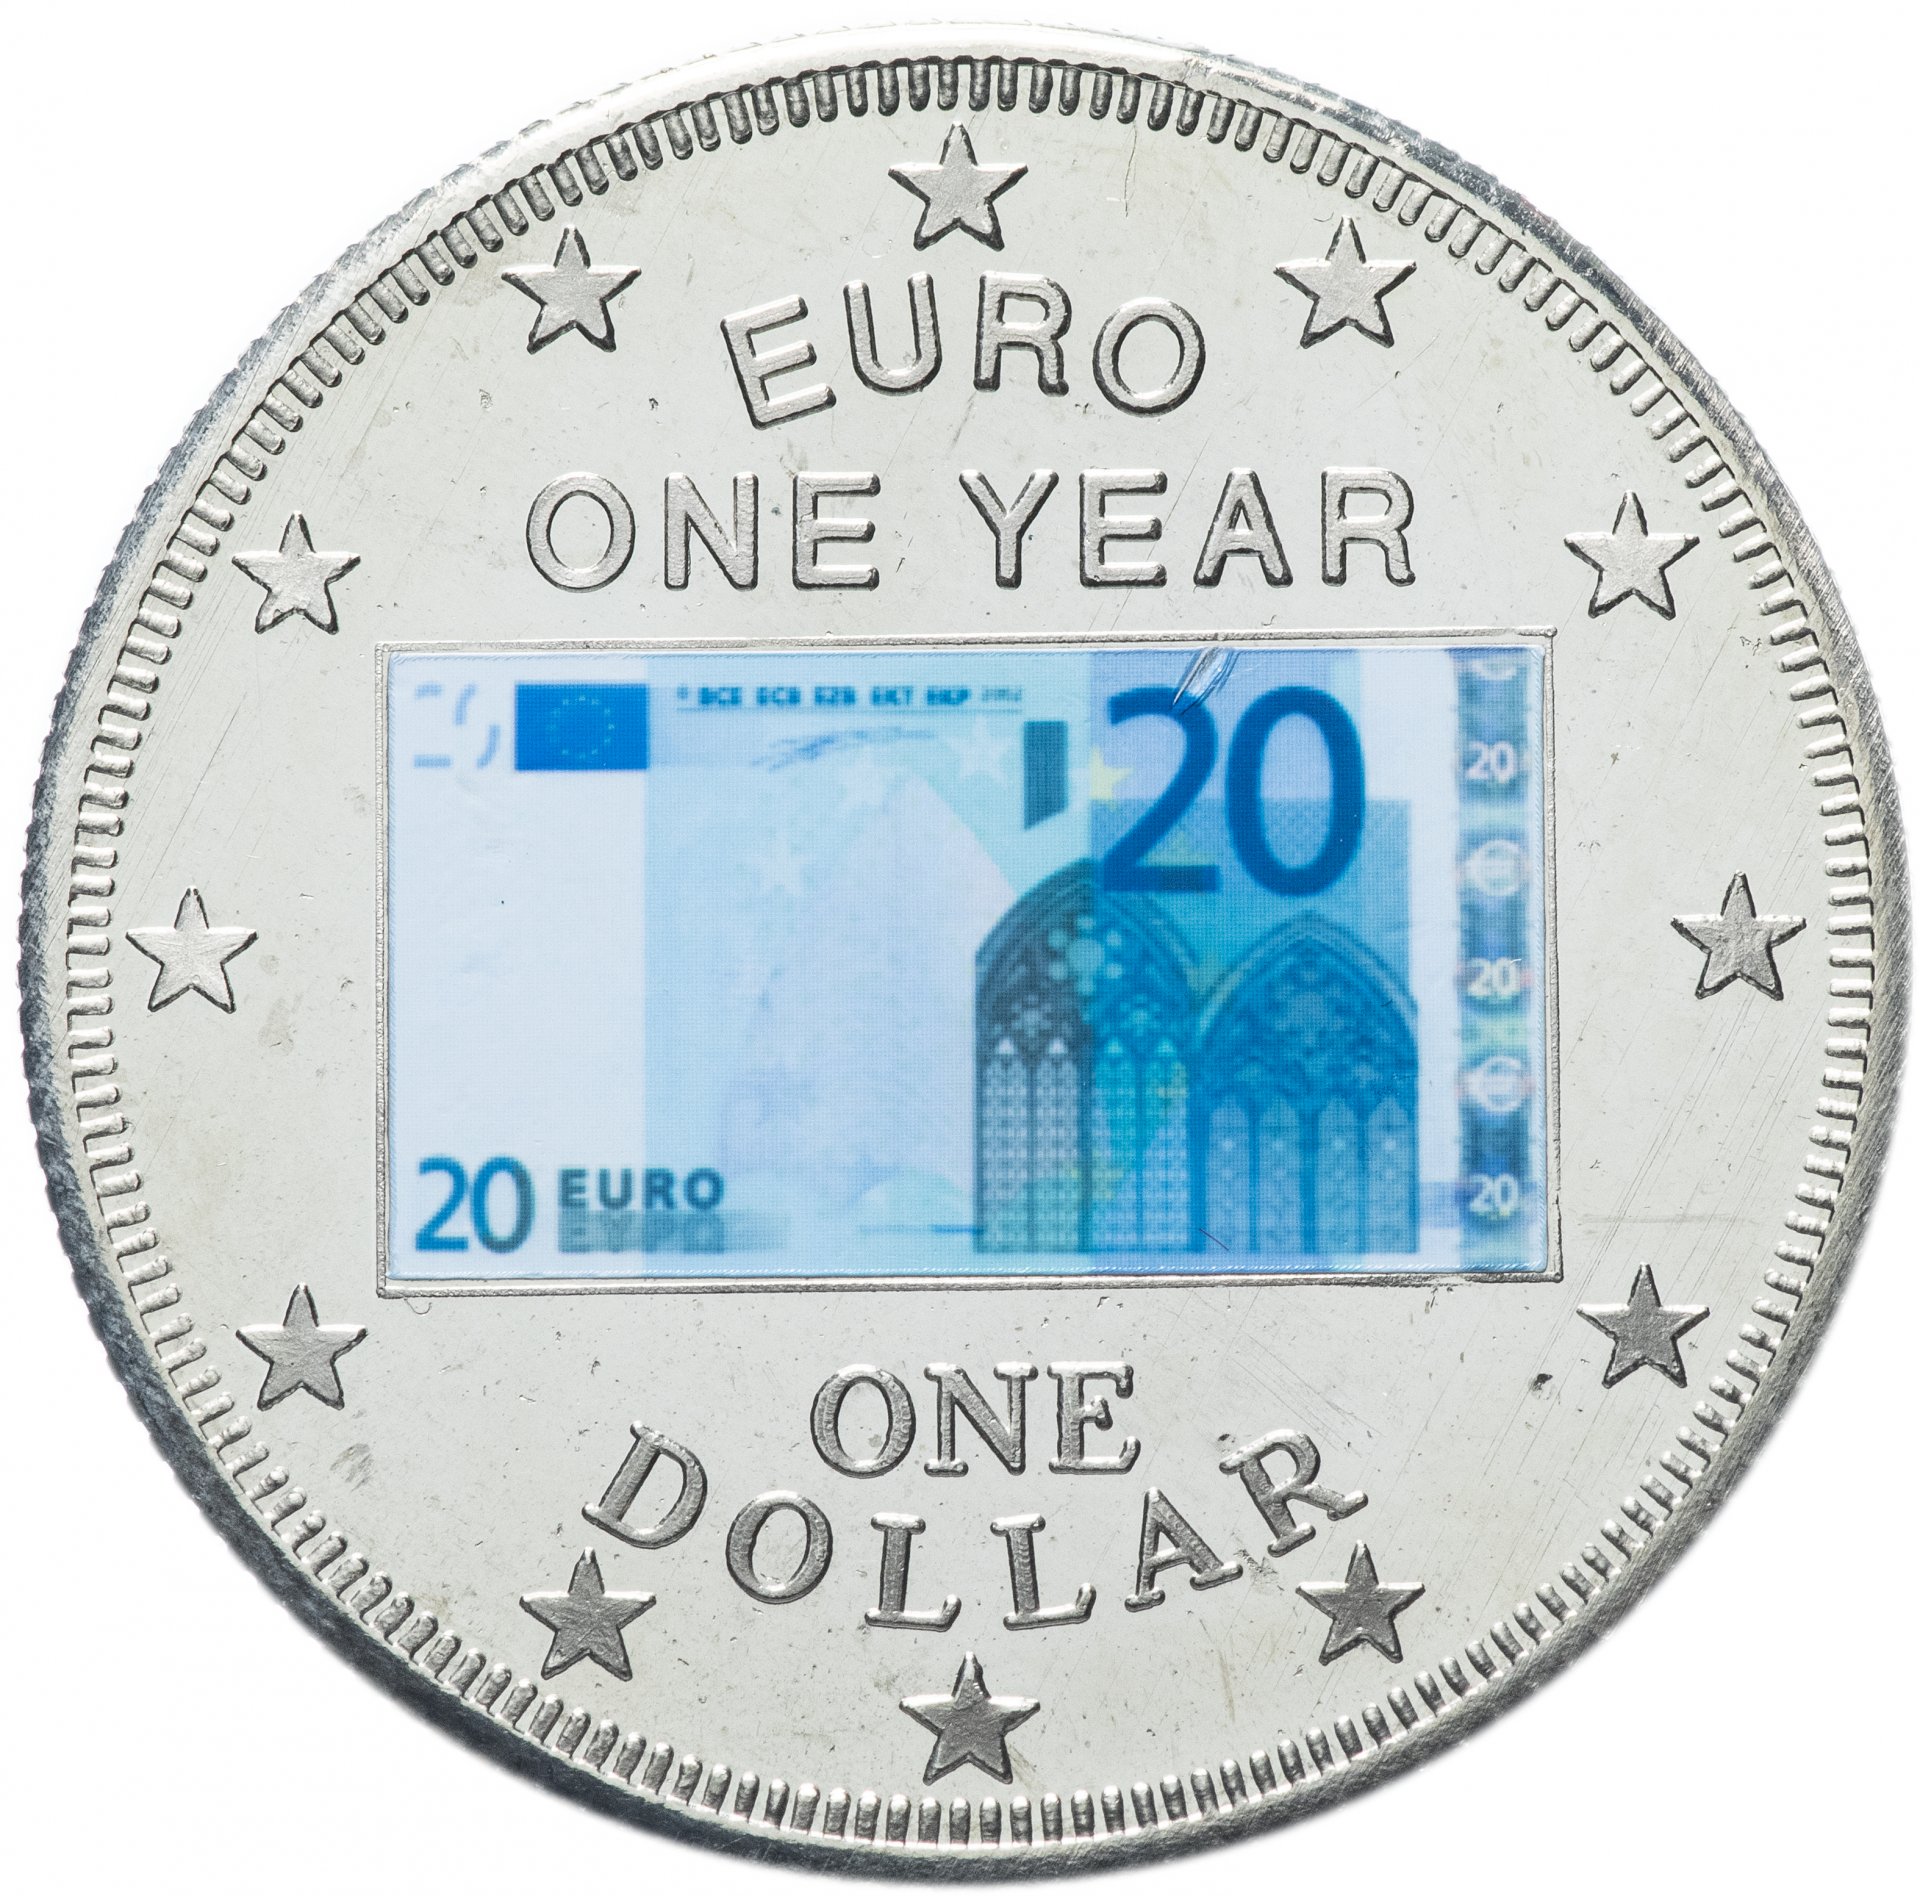 2003 долларов в рублях. 1 Доллар 2003. Доллар 2003 года. Монета острова Кука 1 доллар. Доллар островов Кука.